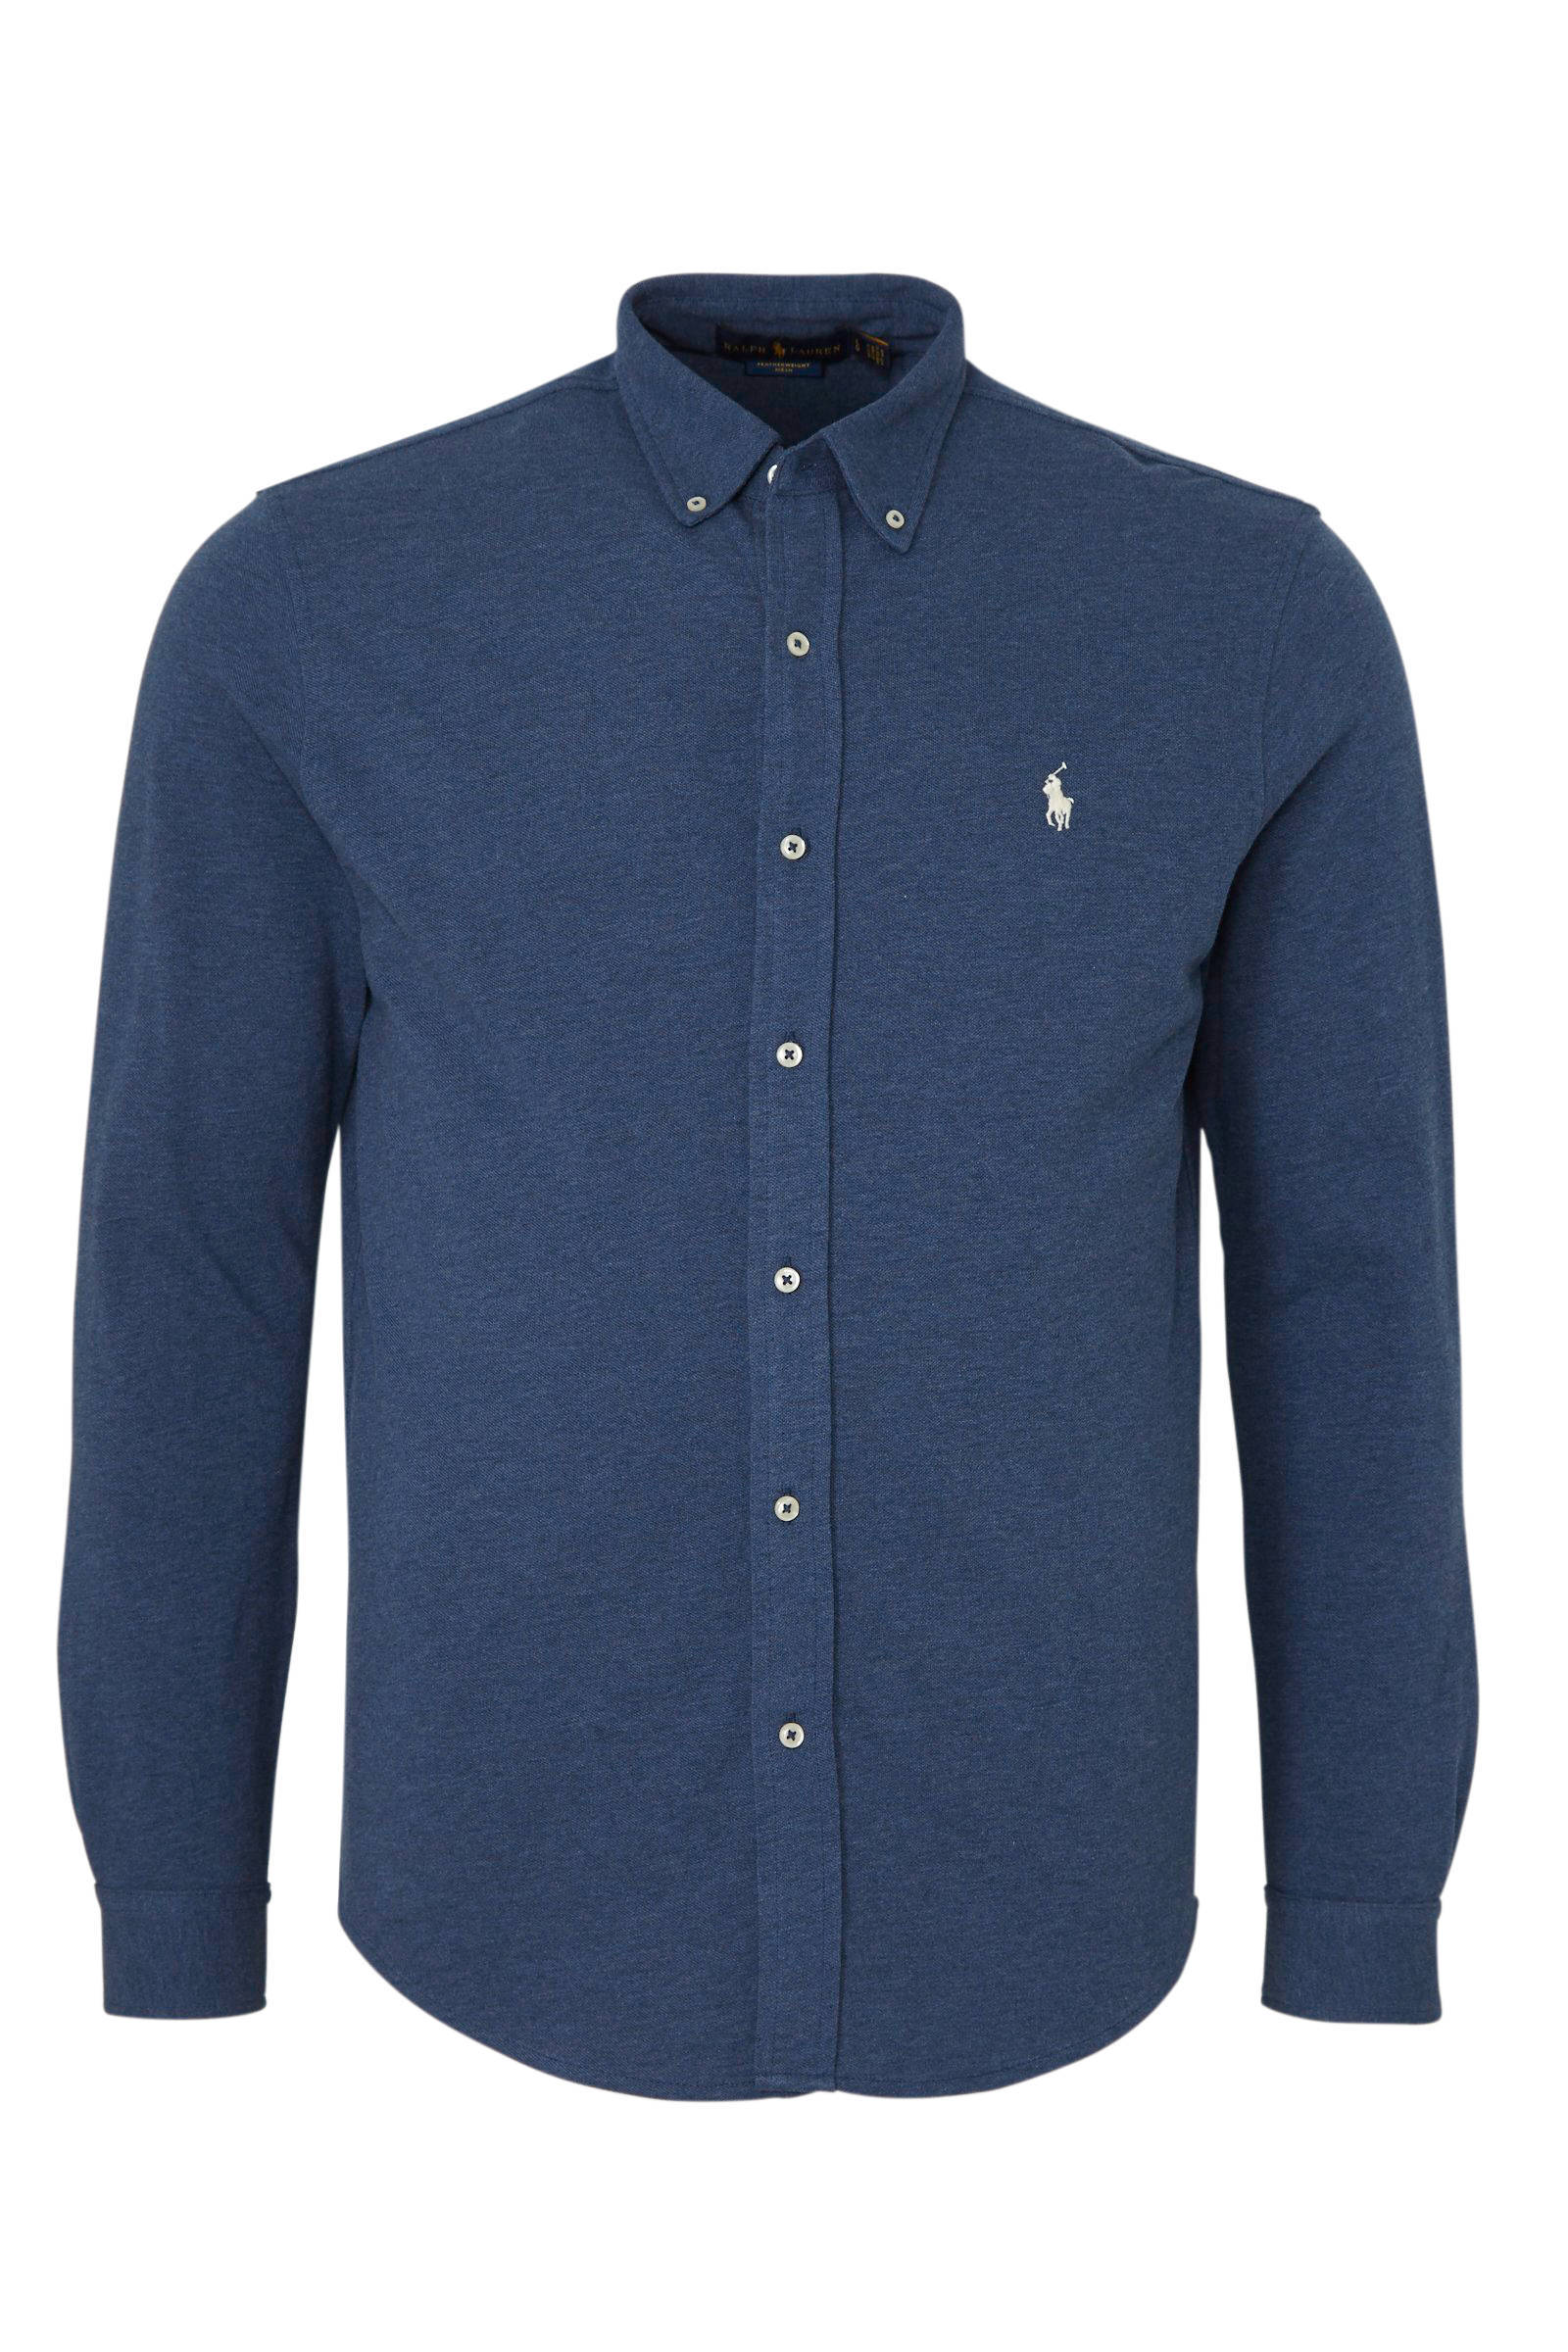 Kleding Herenkleding Overhemden & T-shirts Oxfords & Buttondowns RALPH LAUREN COUNTRY Heren Vintage Blauwe Knop Front Heavy Denim Shirt Maat Groot 